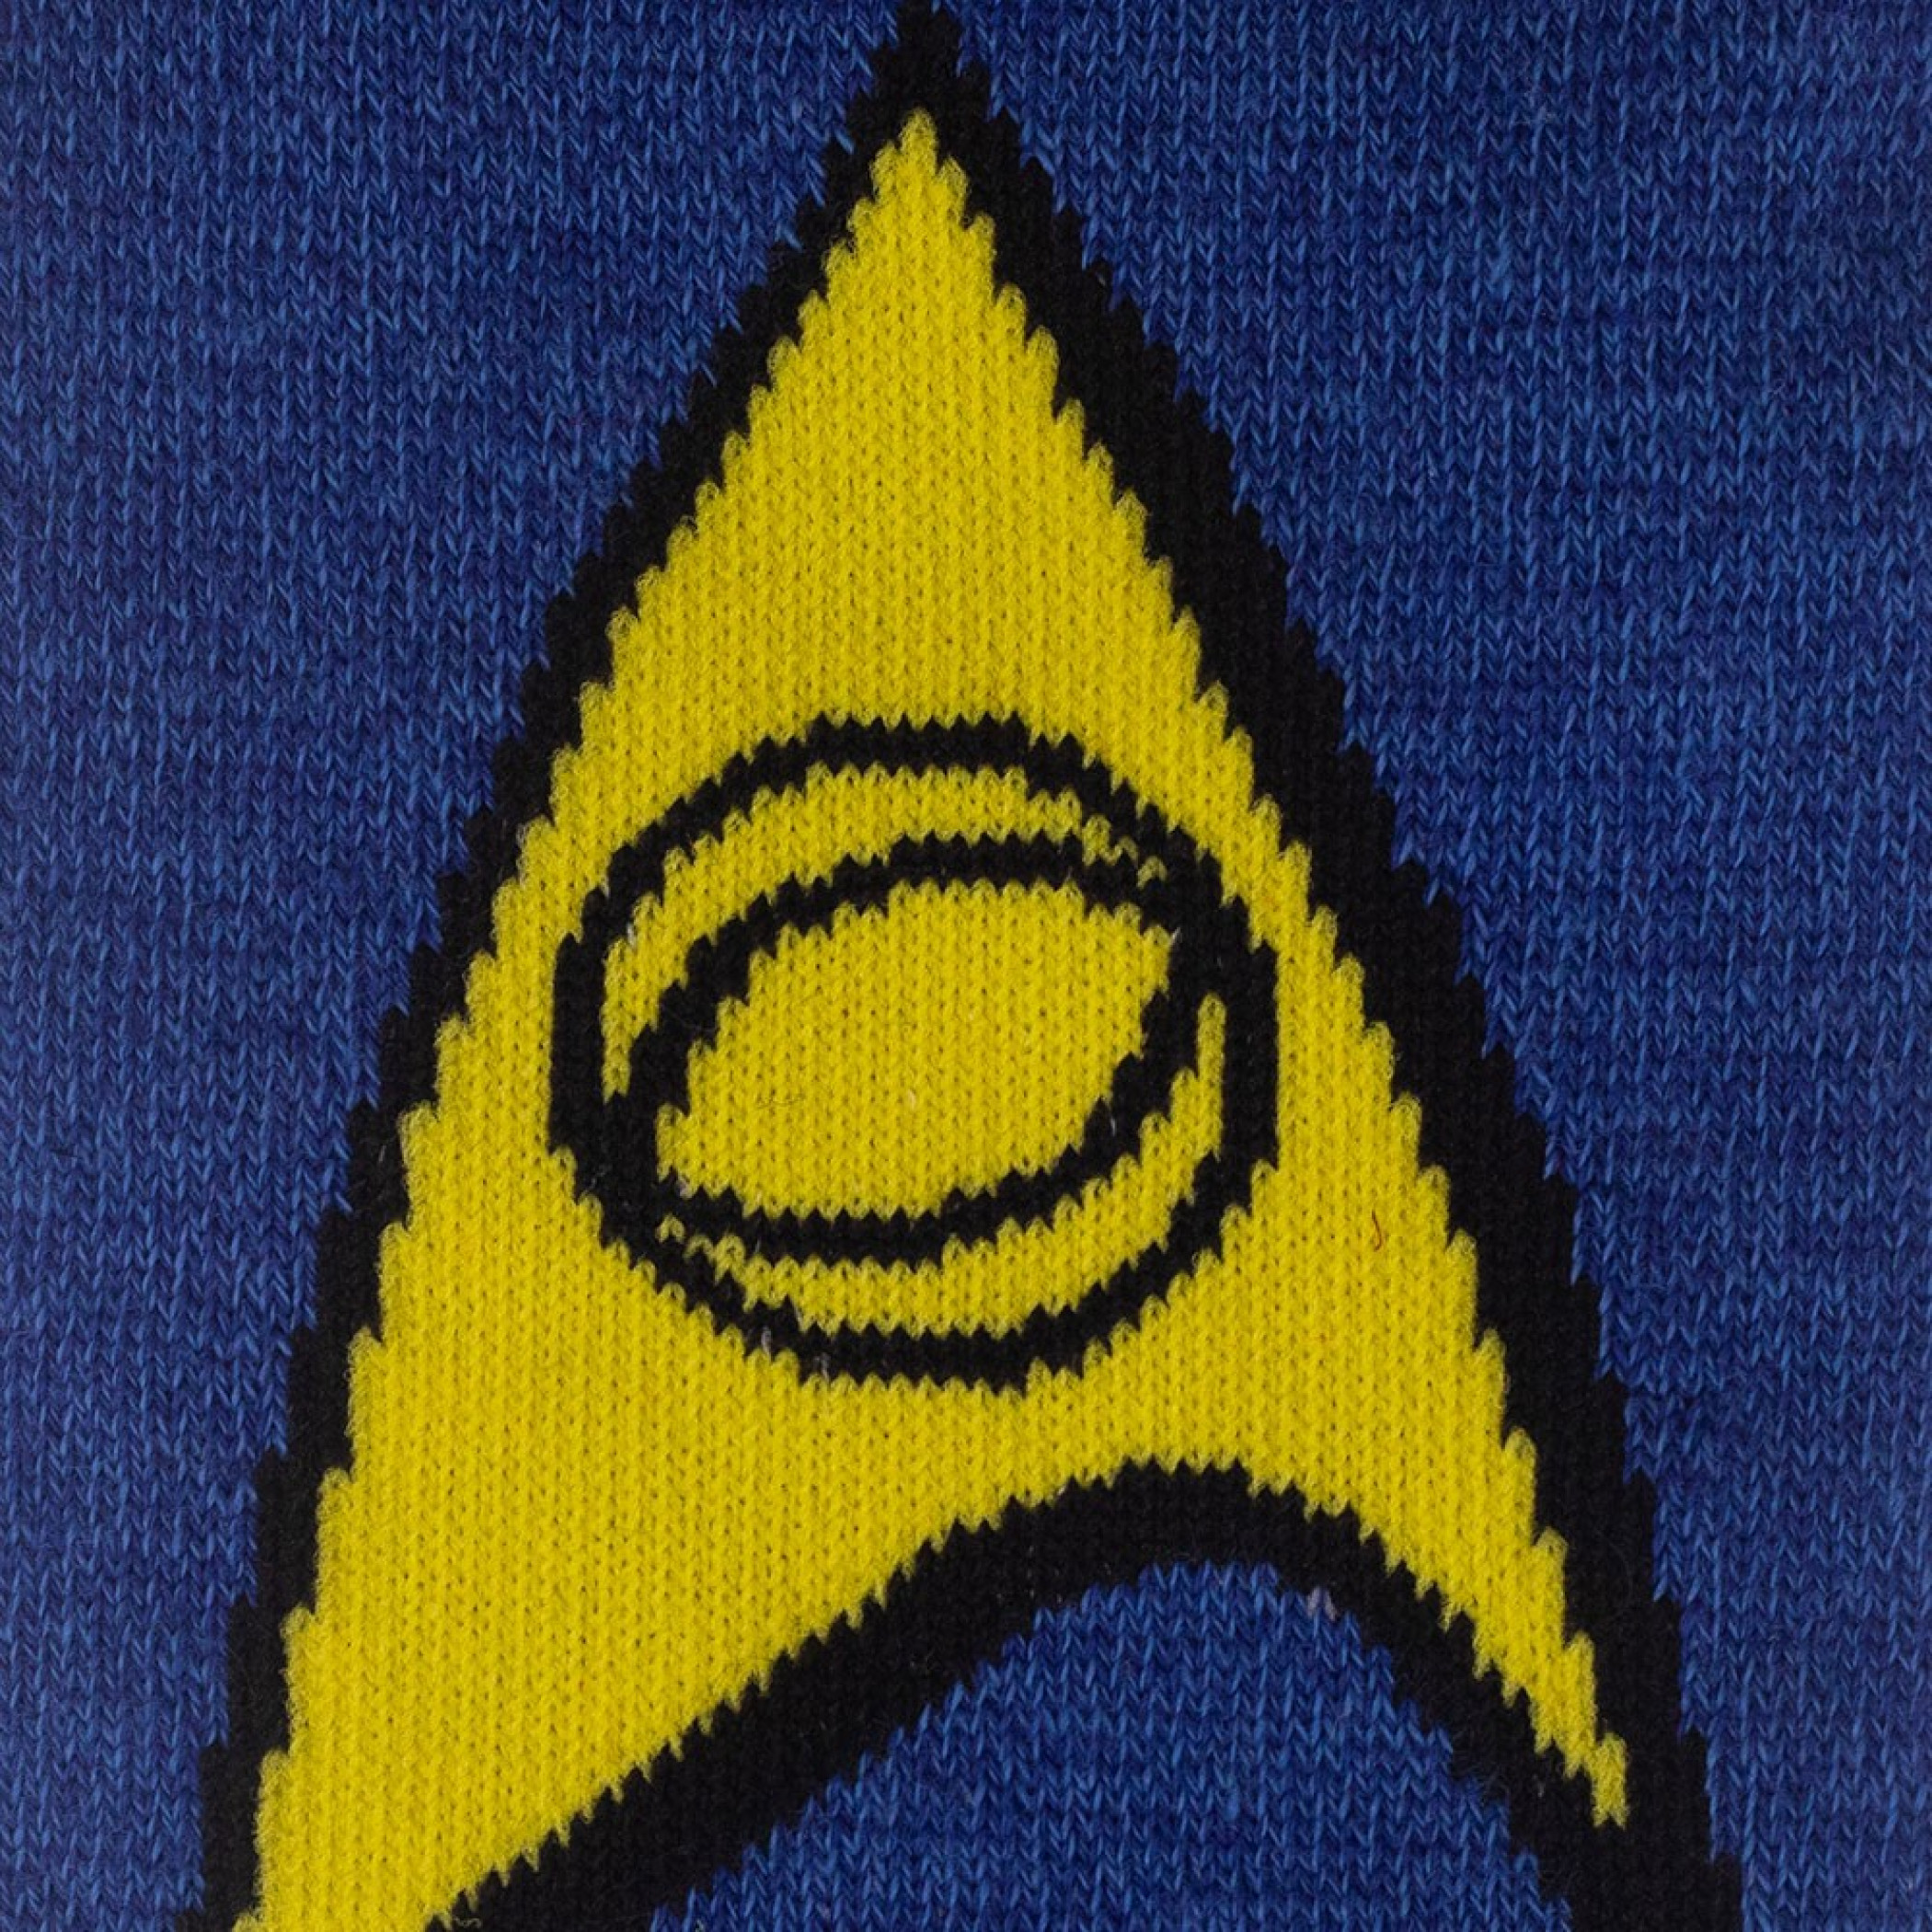 Star Trek 5-Pair Pack of Crew Socks